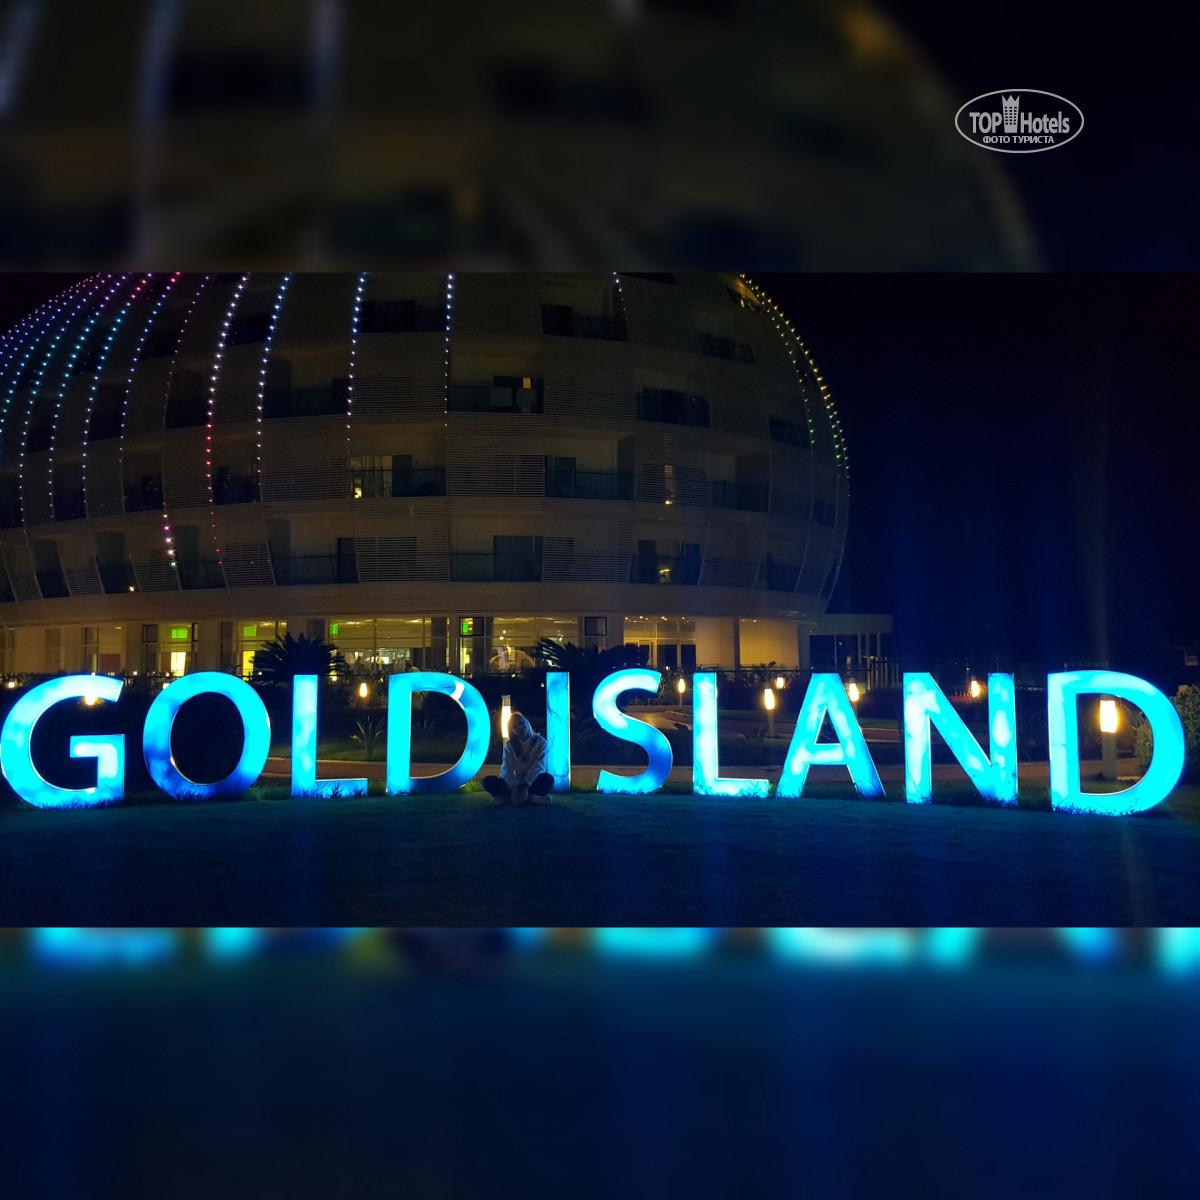 Gold island selected. Gold Island 5 Турция. Голд Исланд Фэмили. Отель Gold Island 5* корпуса. Голд Исланд карта отеля.